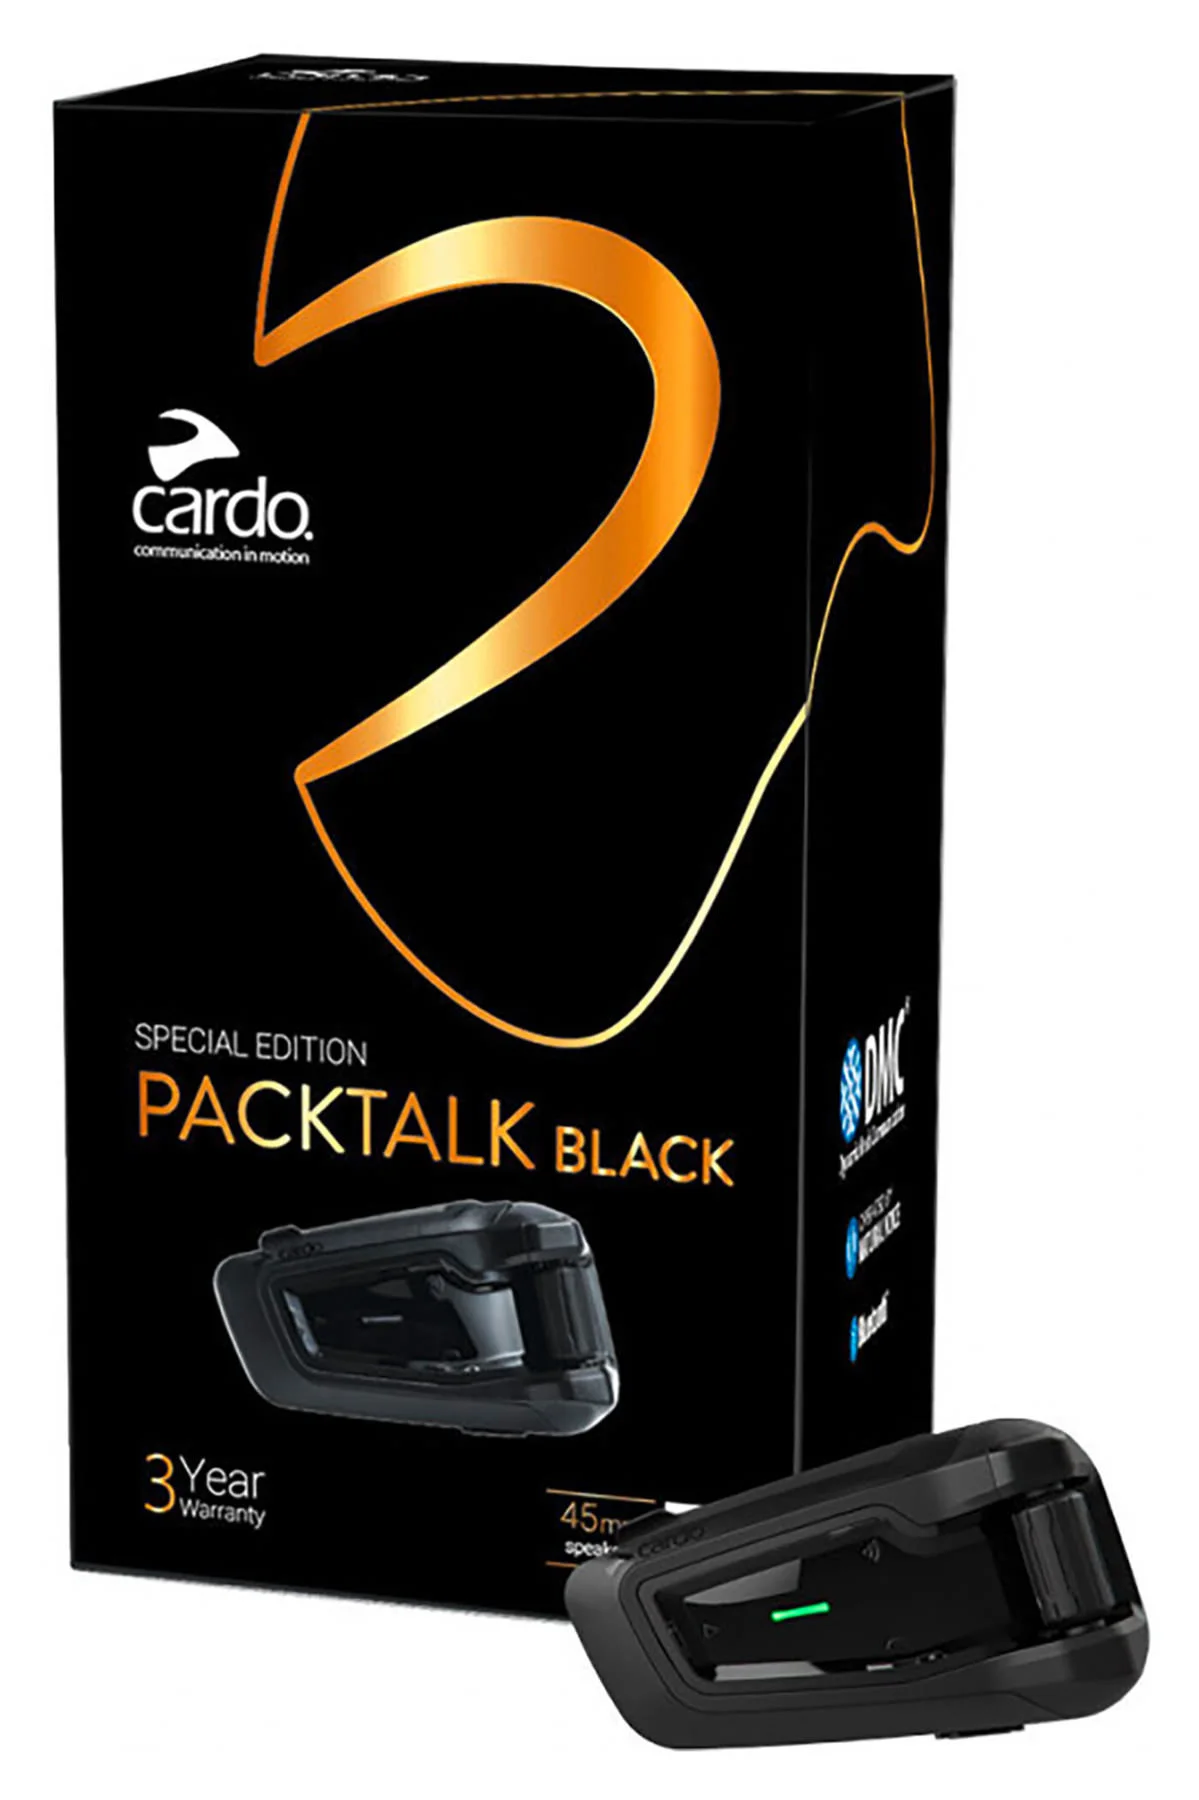 新品正規品[Ken様専用]Cardo PACKTALK BLACK ソロ 限定 装備/装具